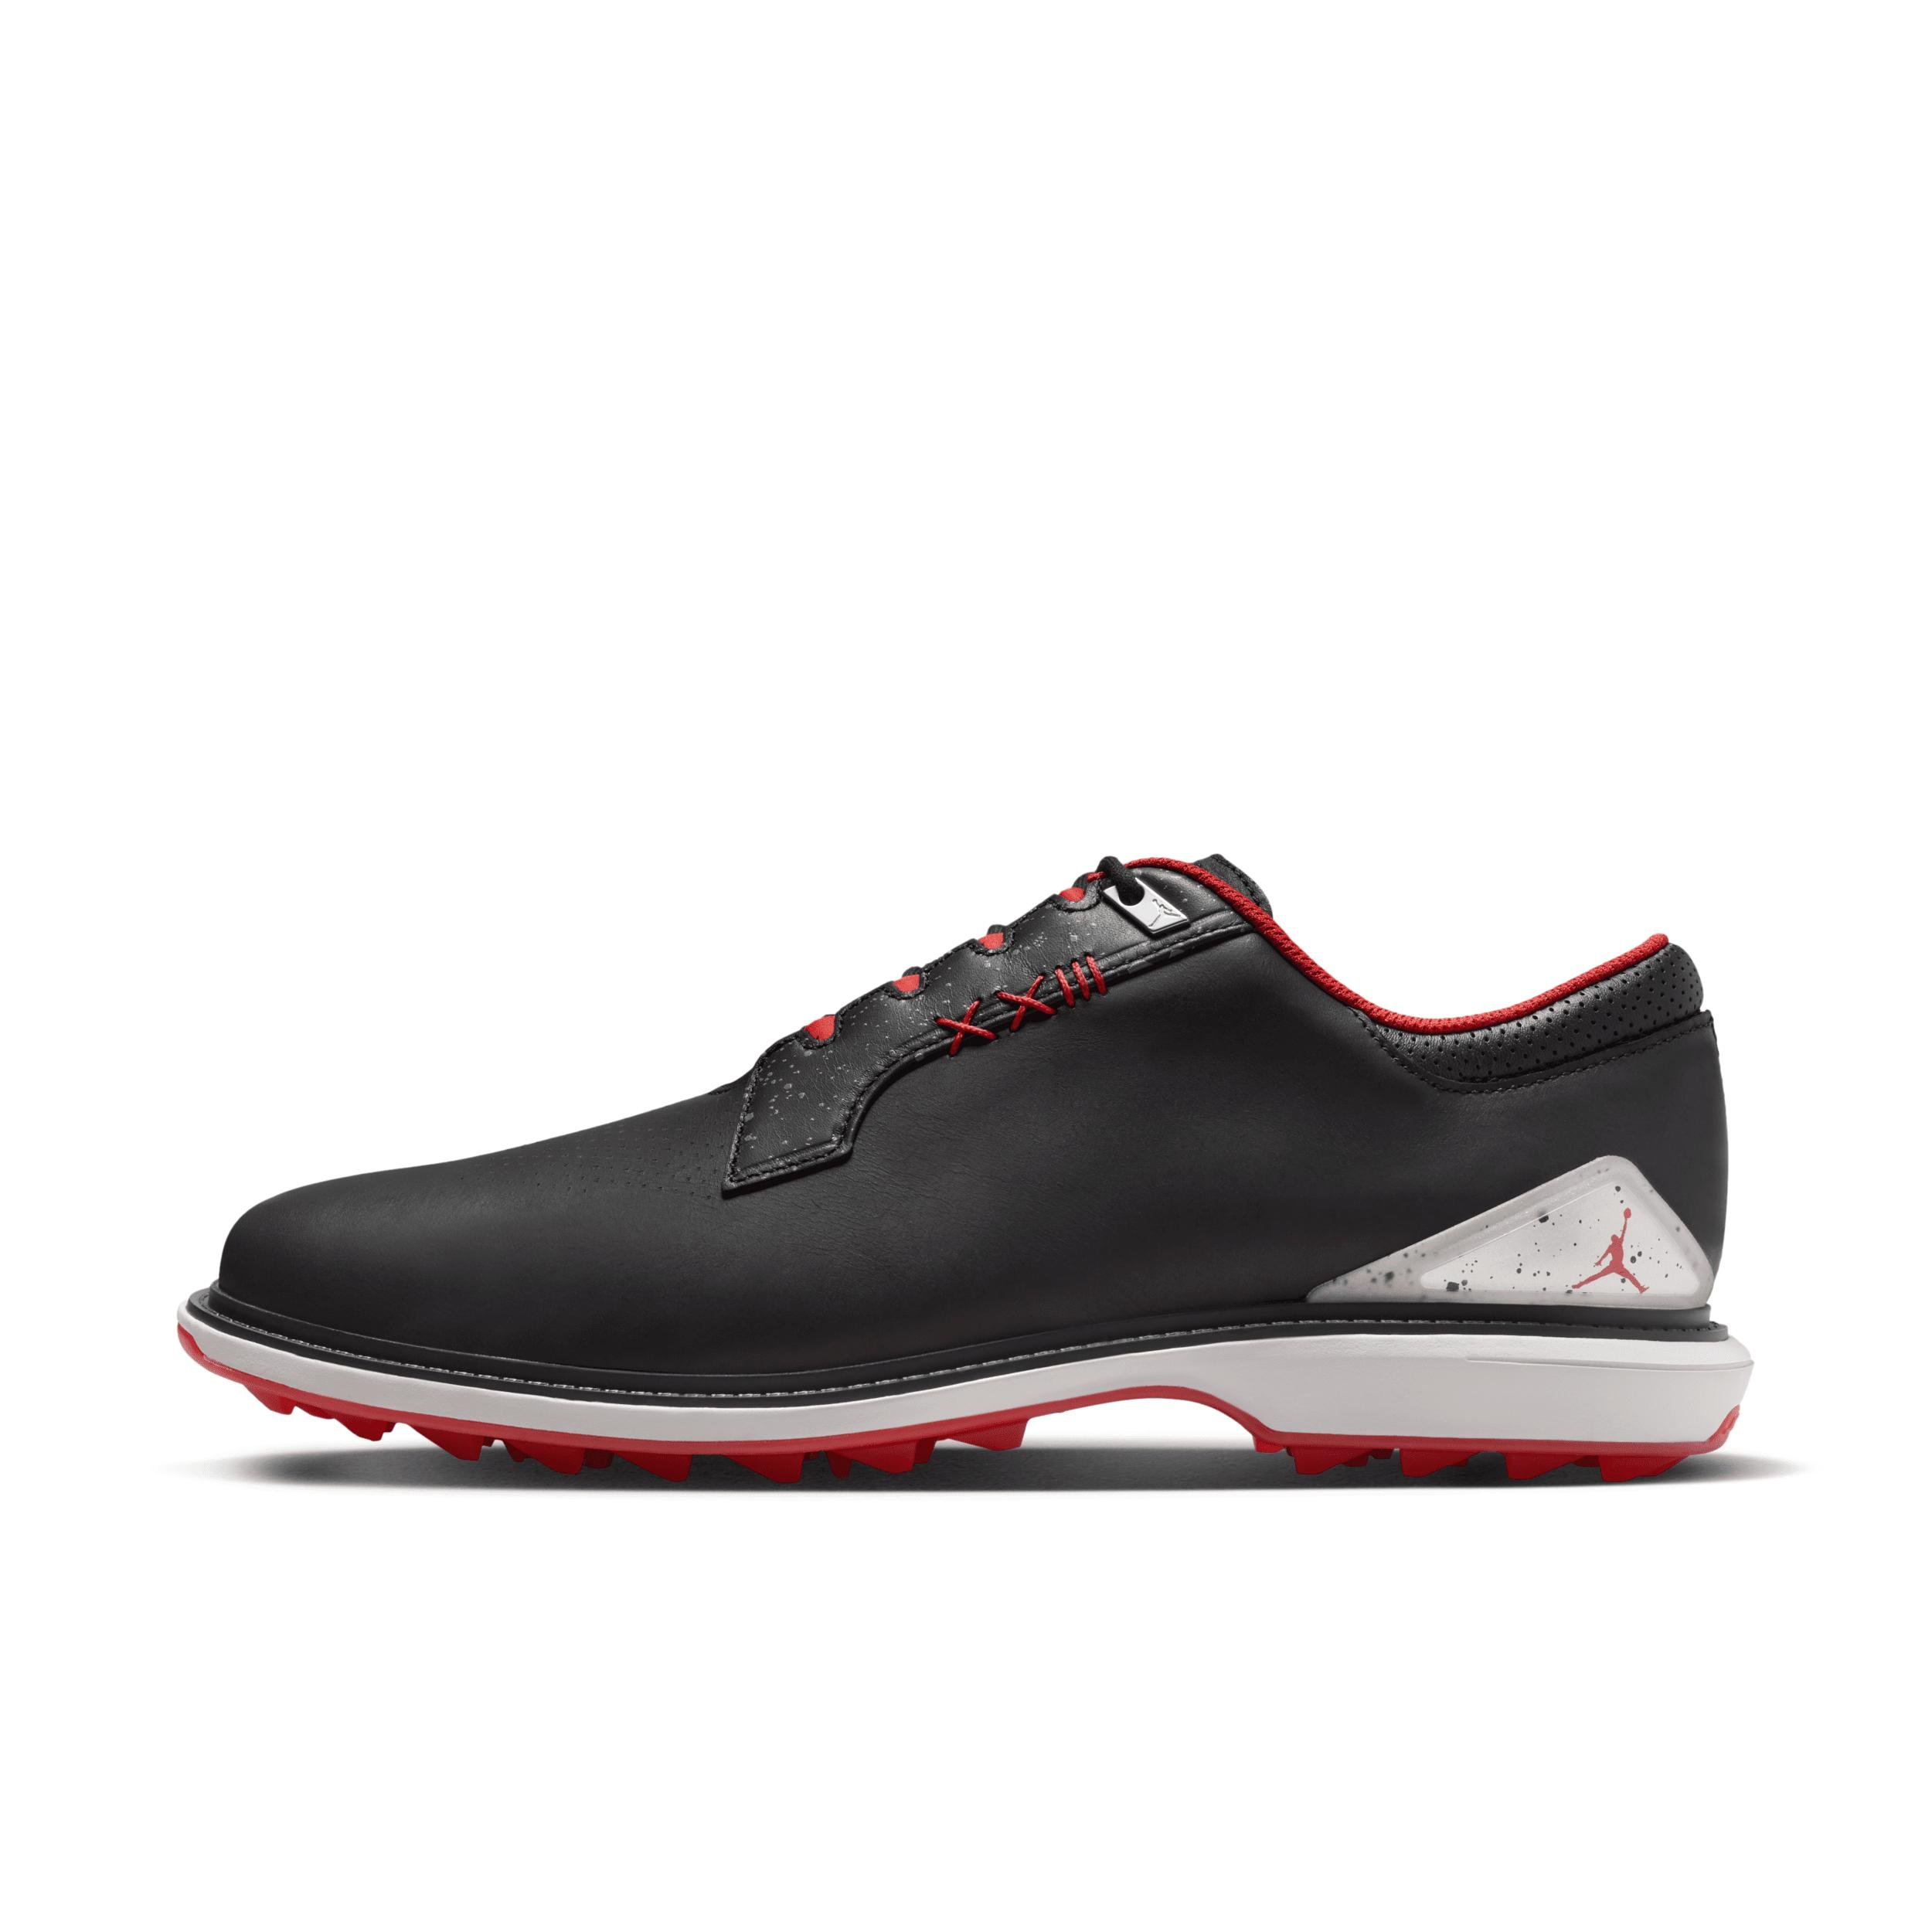 Men's Jordan ADG 5 Golf Shoes by JORDAN